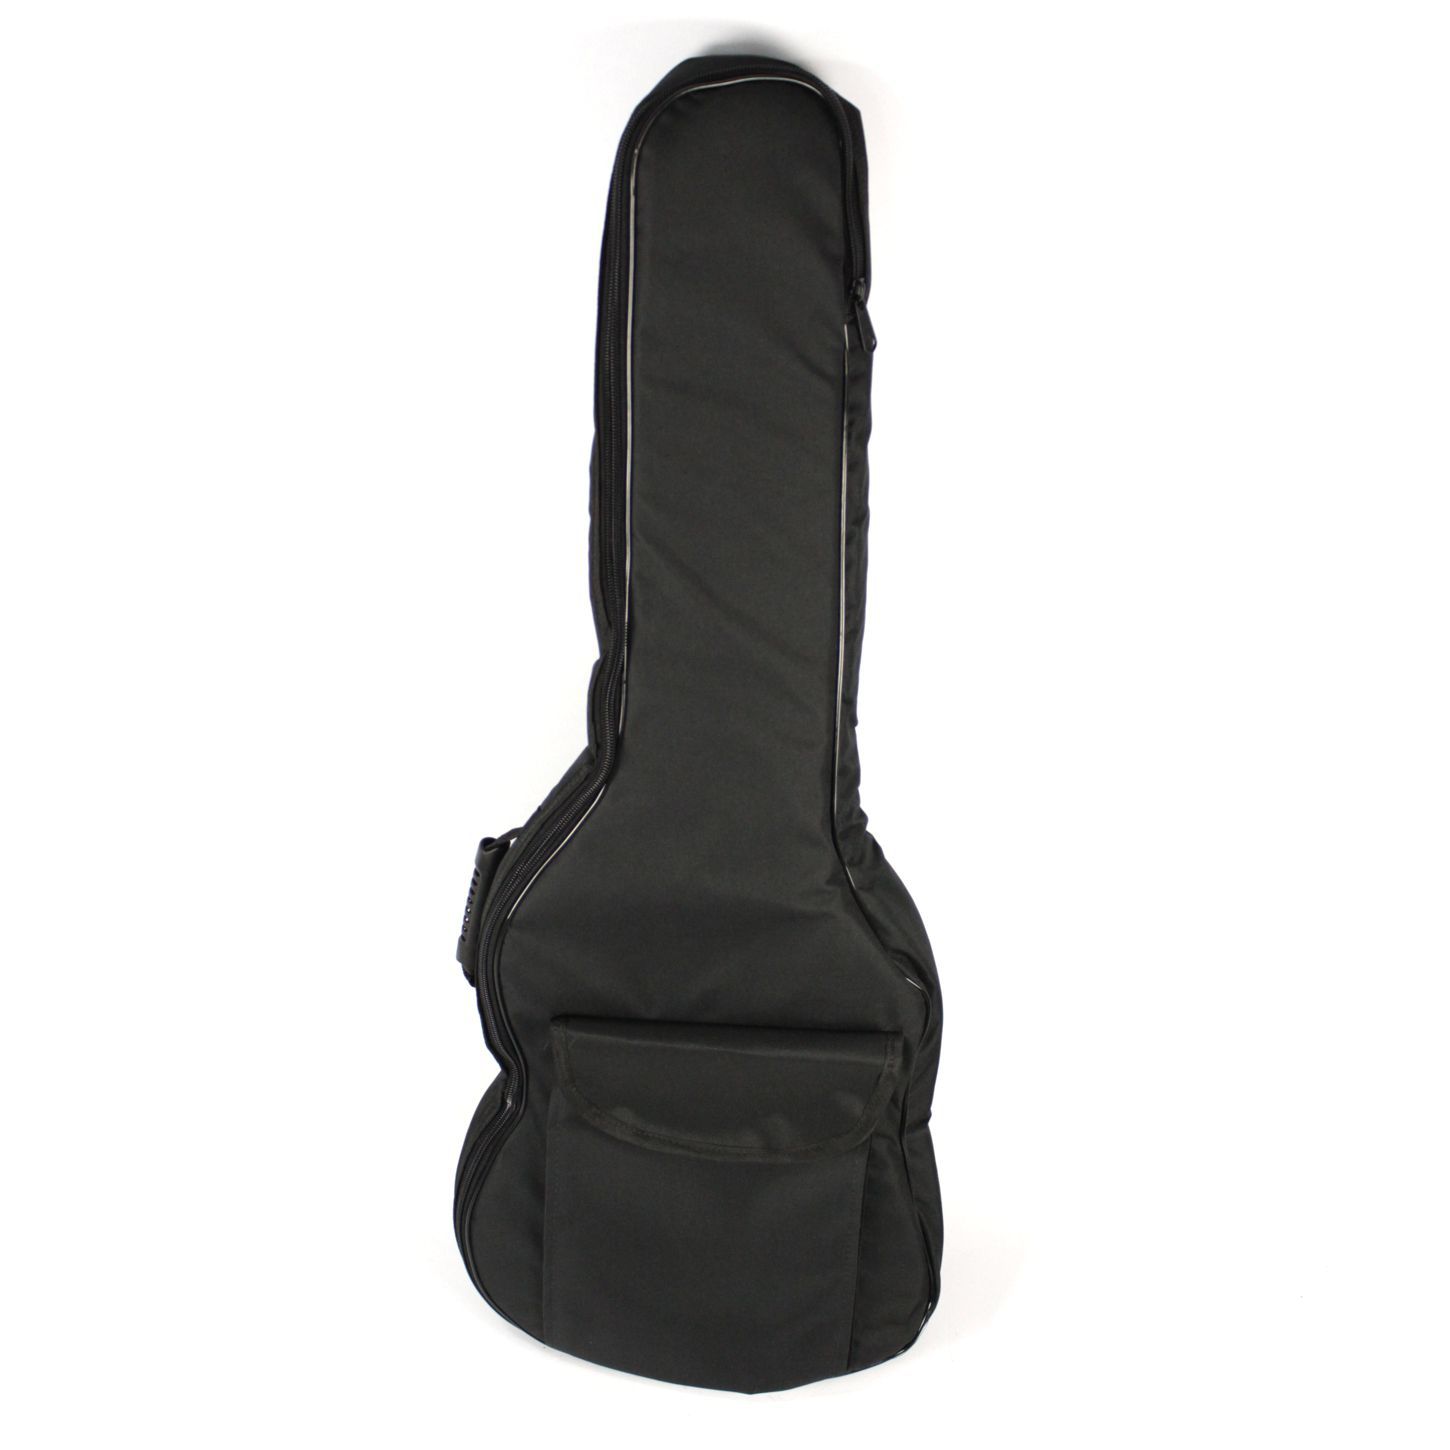 Capa CRBAG EXTRA Luxo para Guitarra NO Formato Ziper Lateral Bolso Frontal e ALÇA para Mochila CRBAG